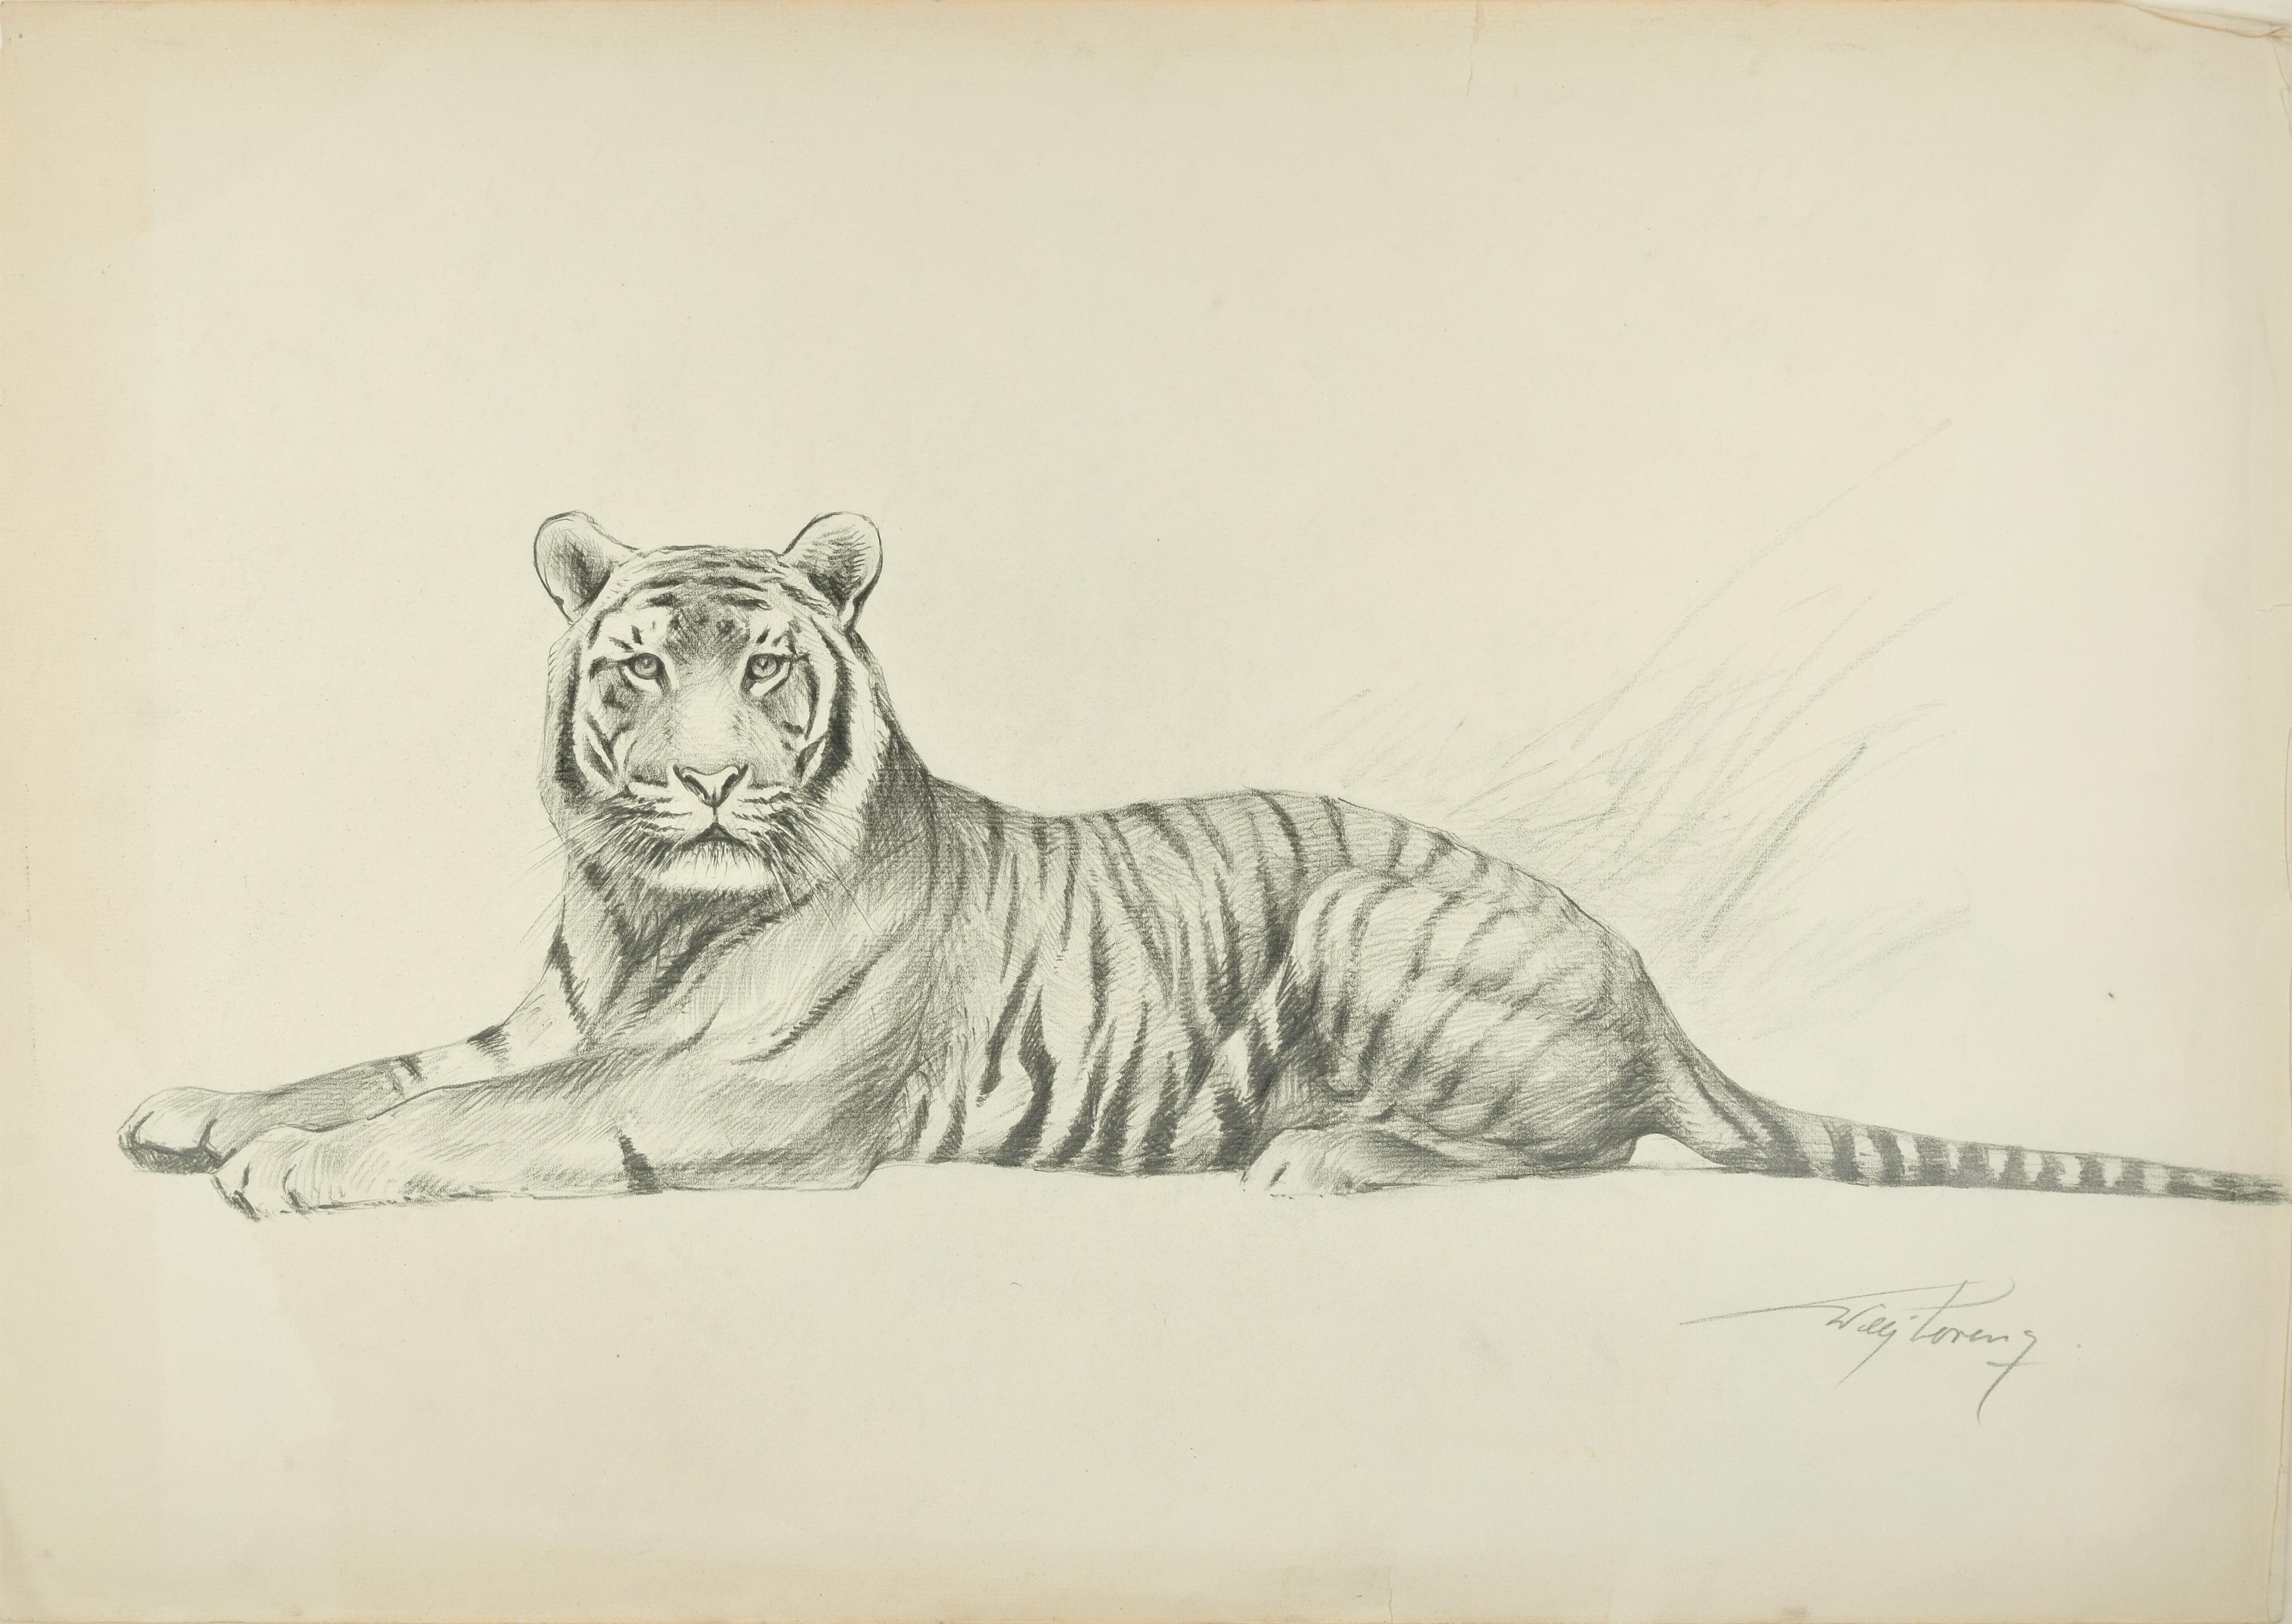 Wilhelm Lorenz Figurative Art - Tiger - Original Pencil Drawing by Willy Lorenz - Mid 20th Century